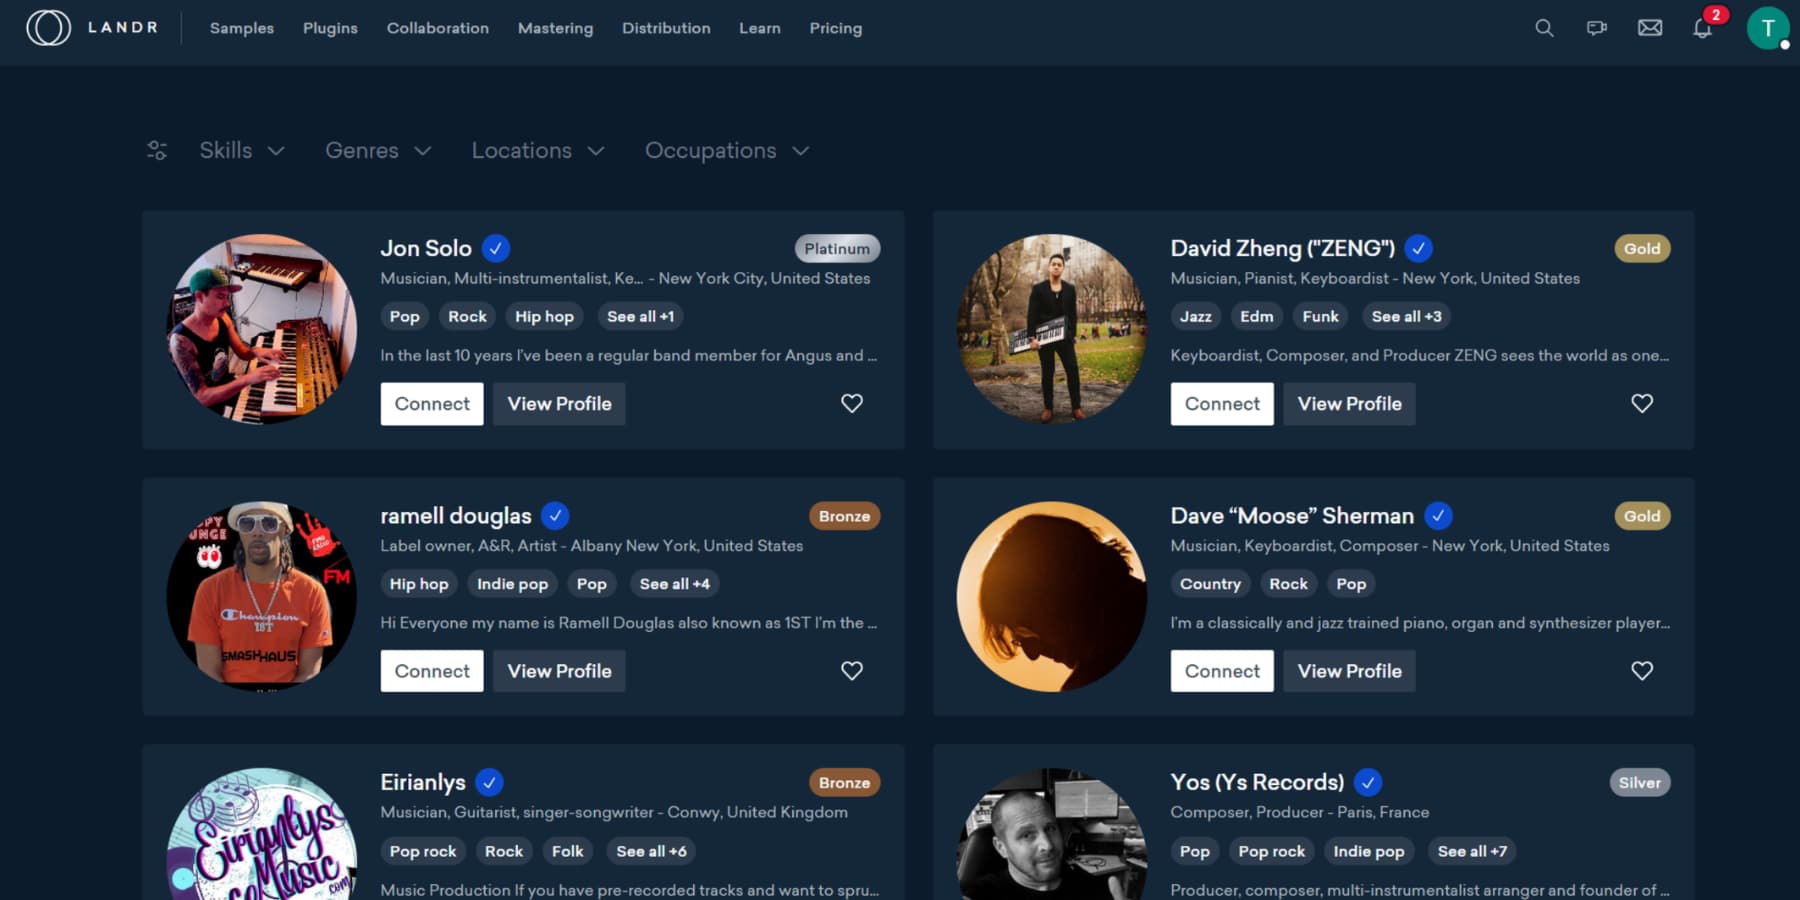 A screenshot of LANDR's fledging community of musicians